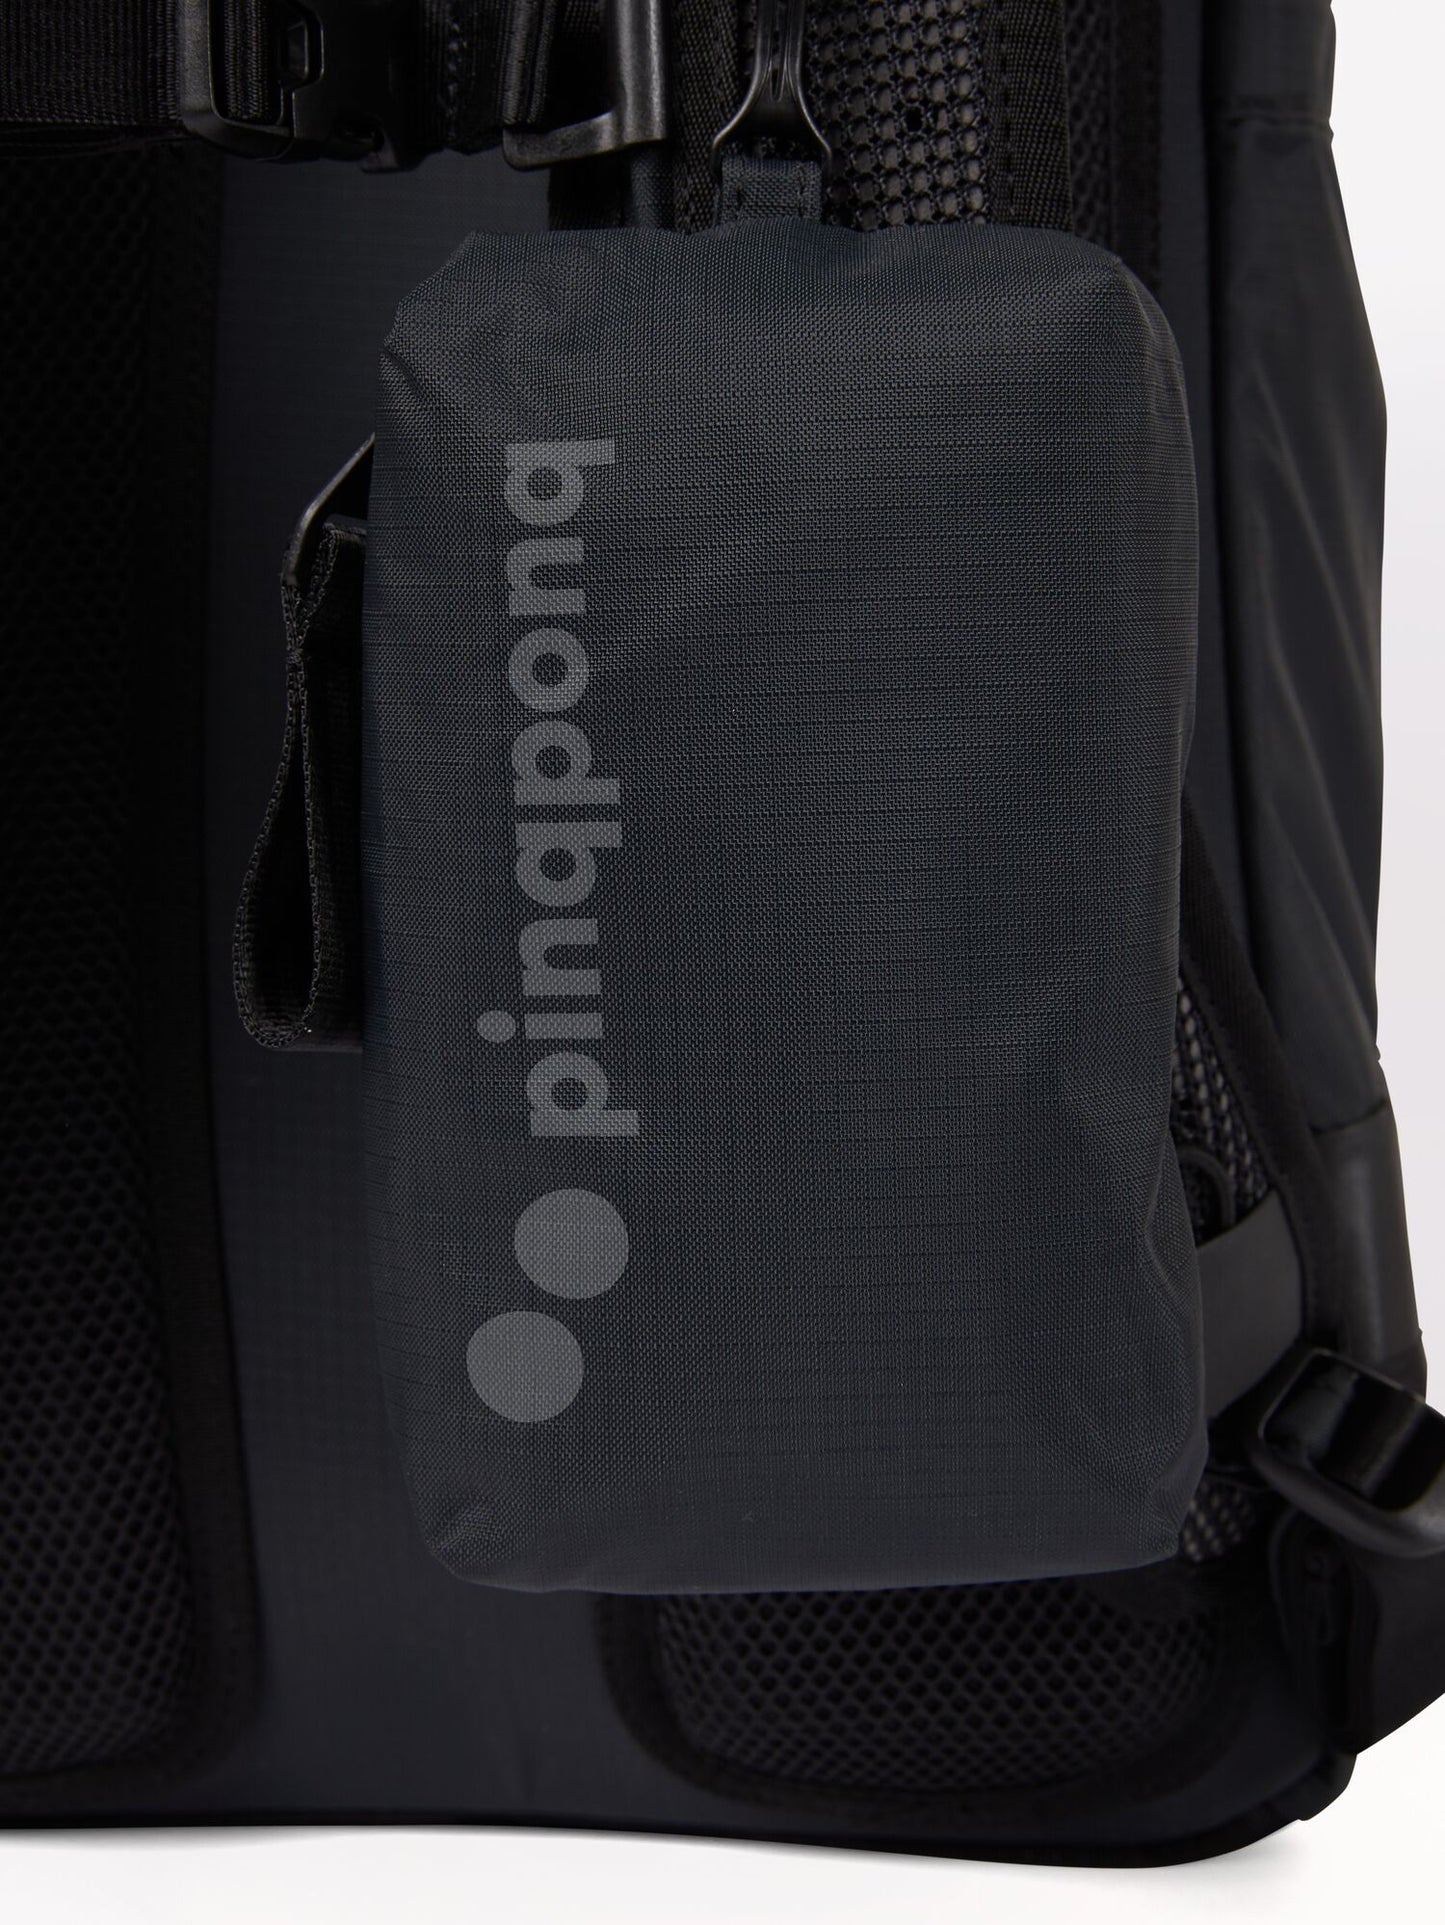 Pinqponq-Komut-Medium-Pure-Black-Detail